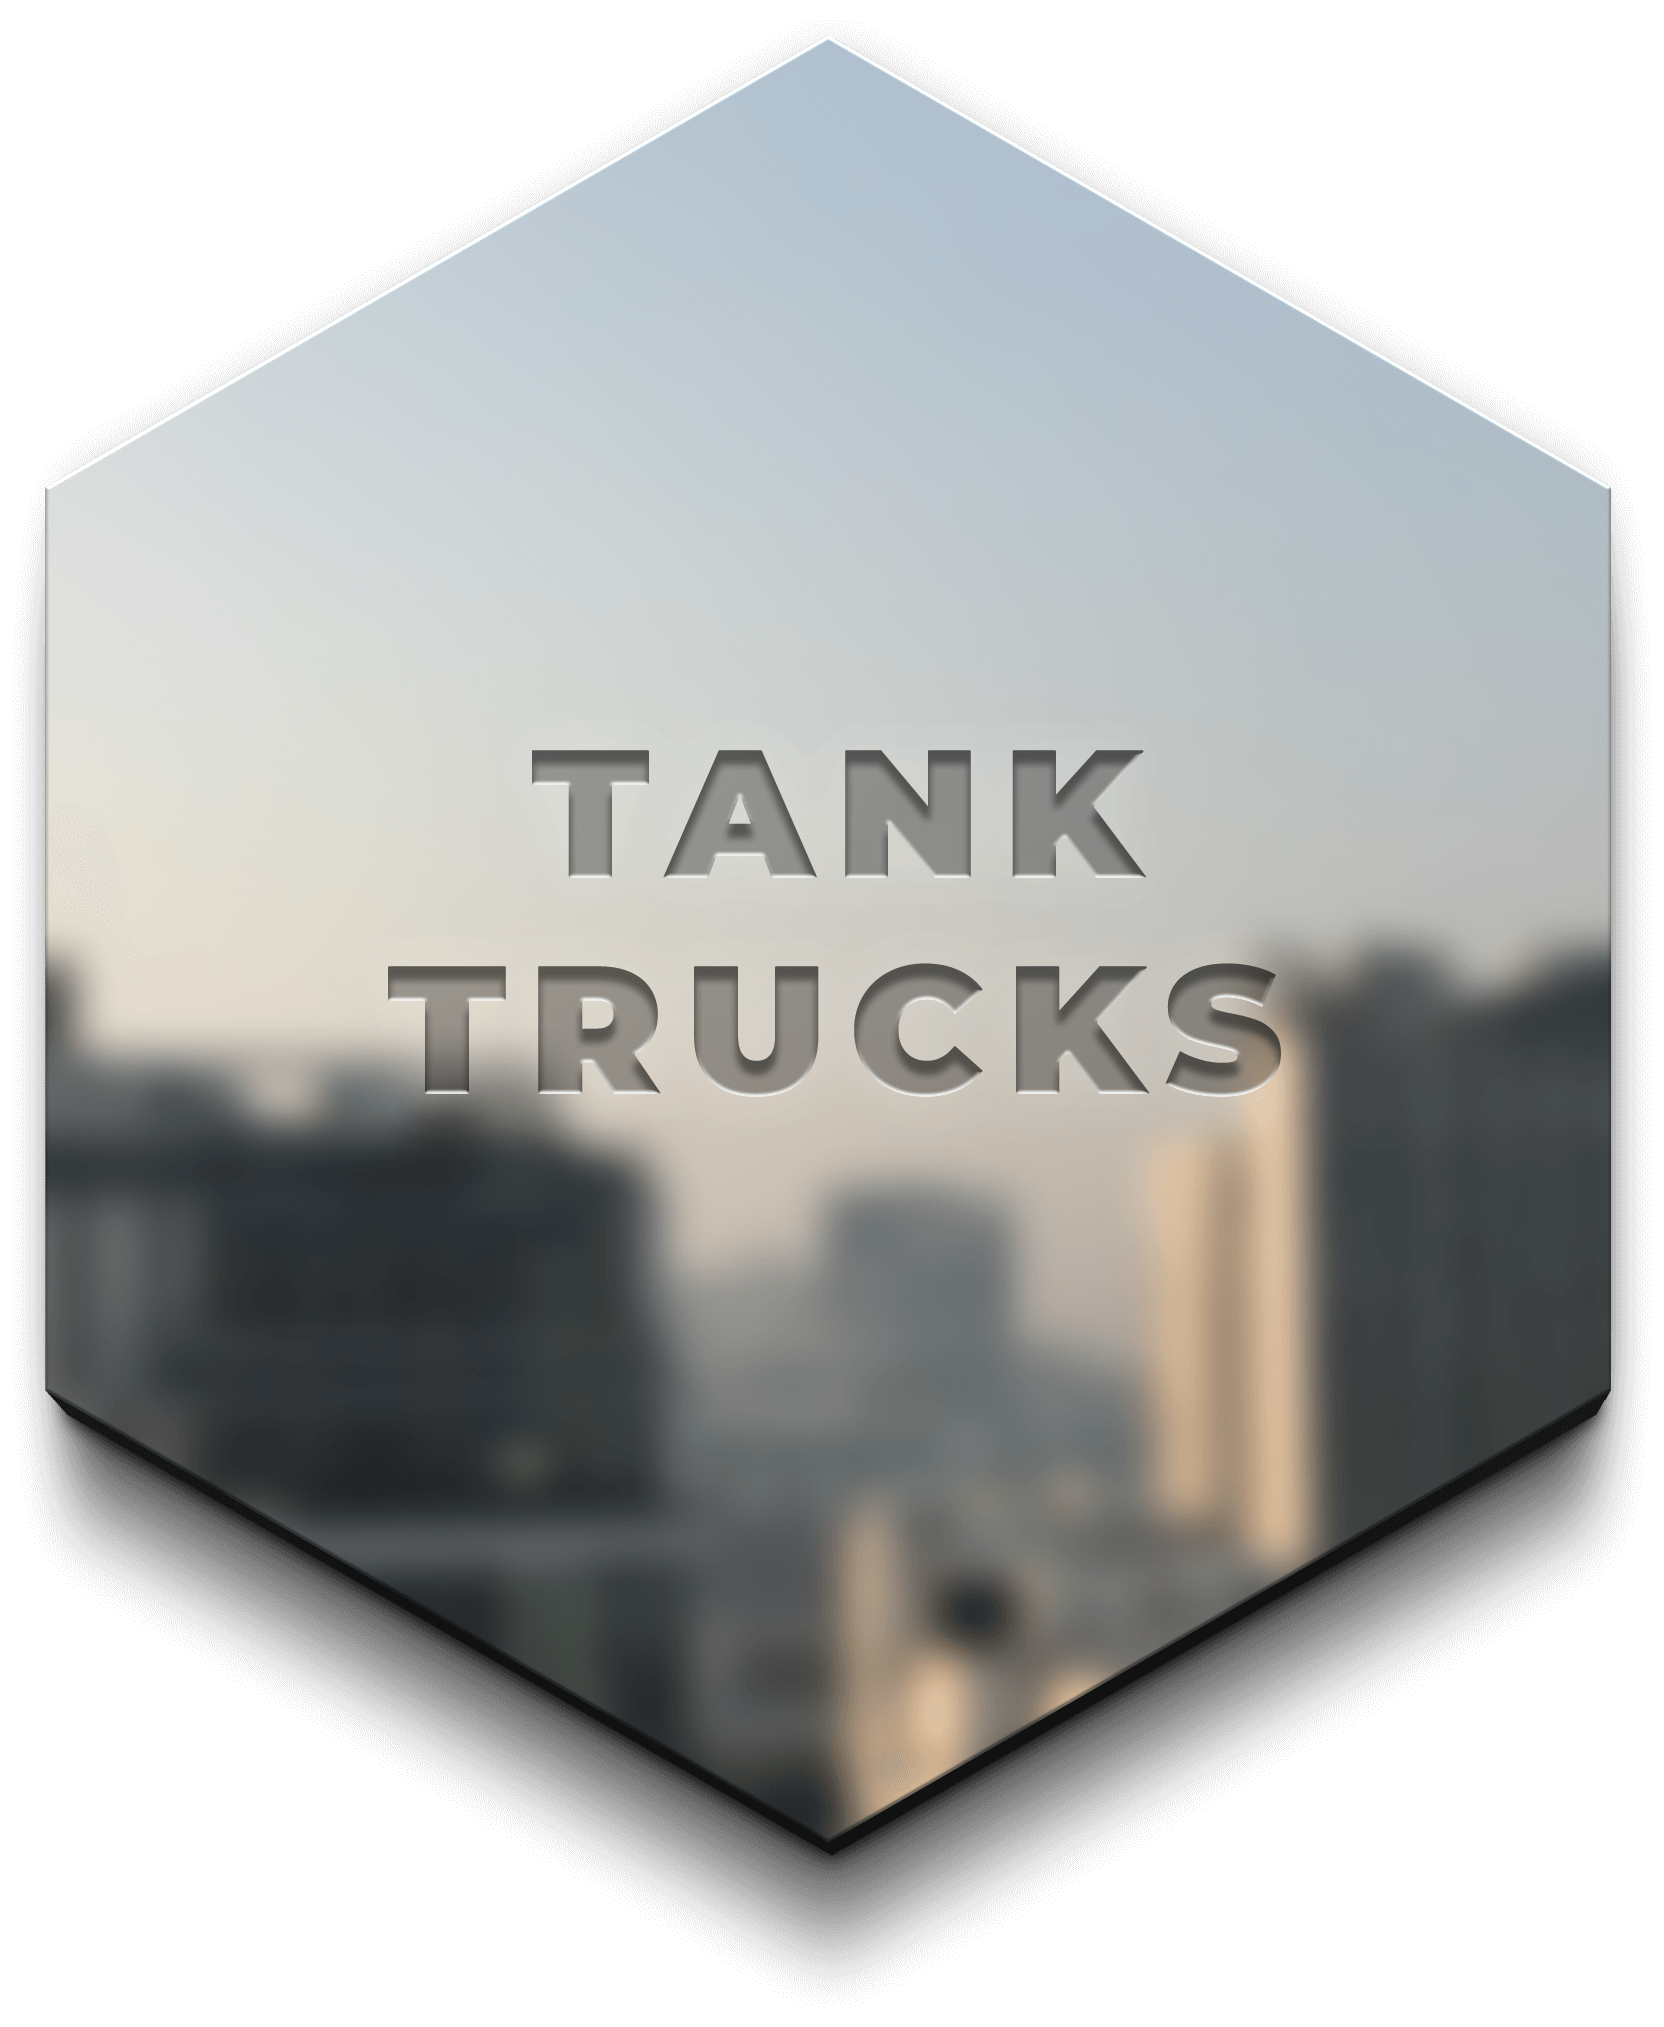 Тank trucks